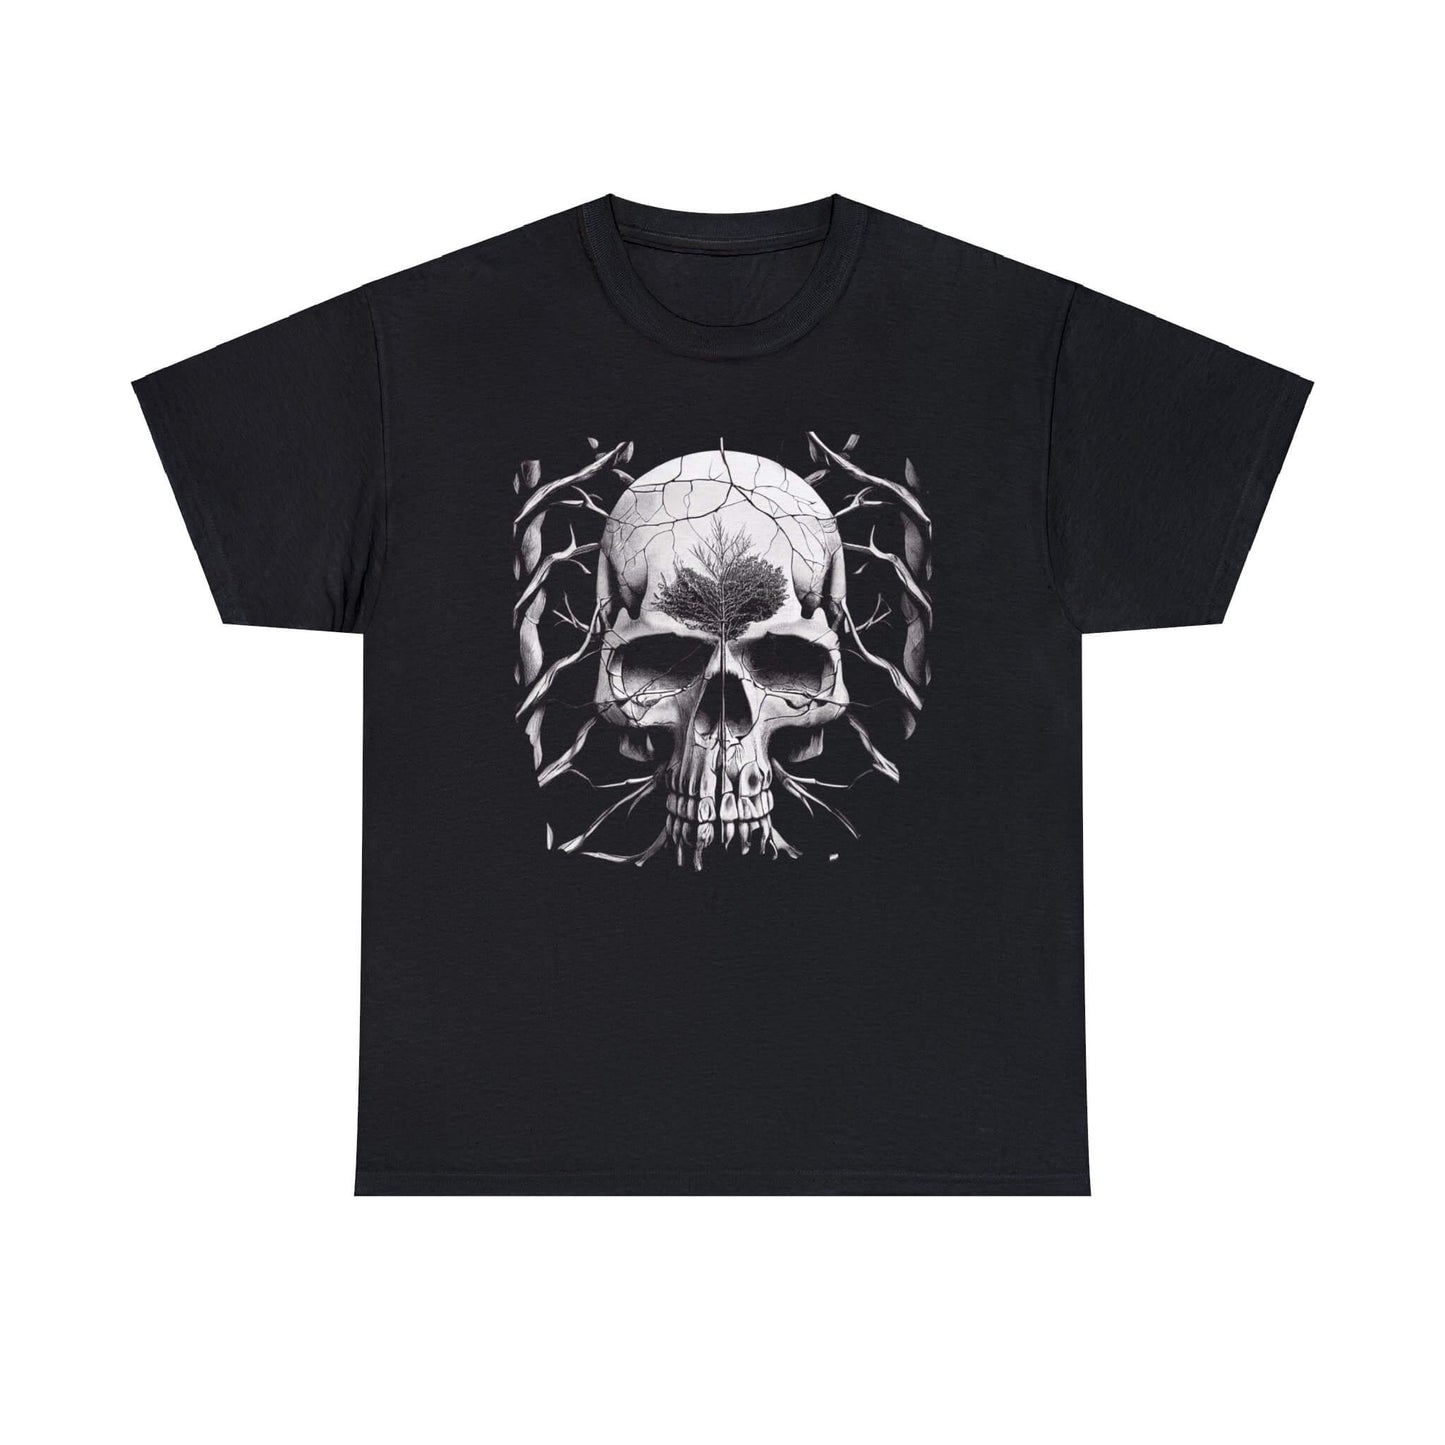 Gothic Skull and Tree T-Shirt, nordisch inspirierte alternative Mode, Unisex S-5XL